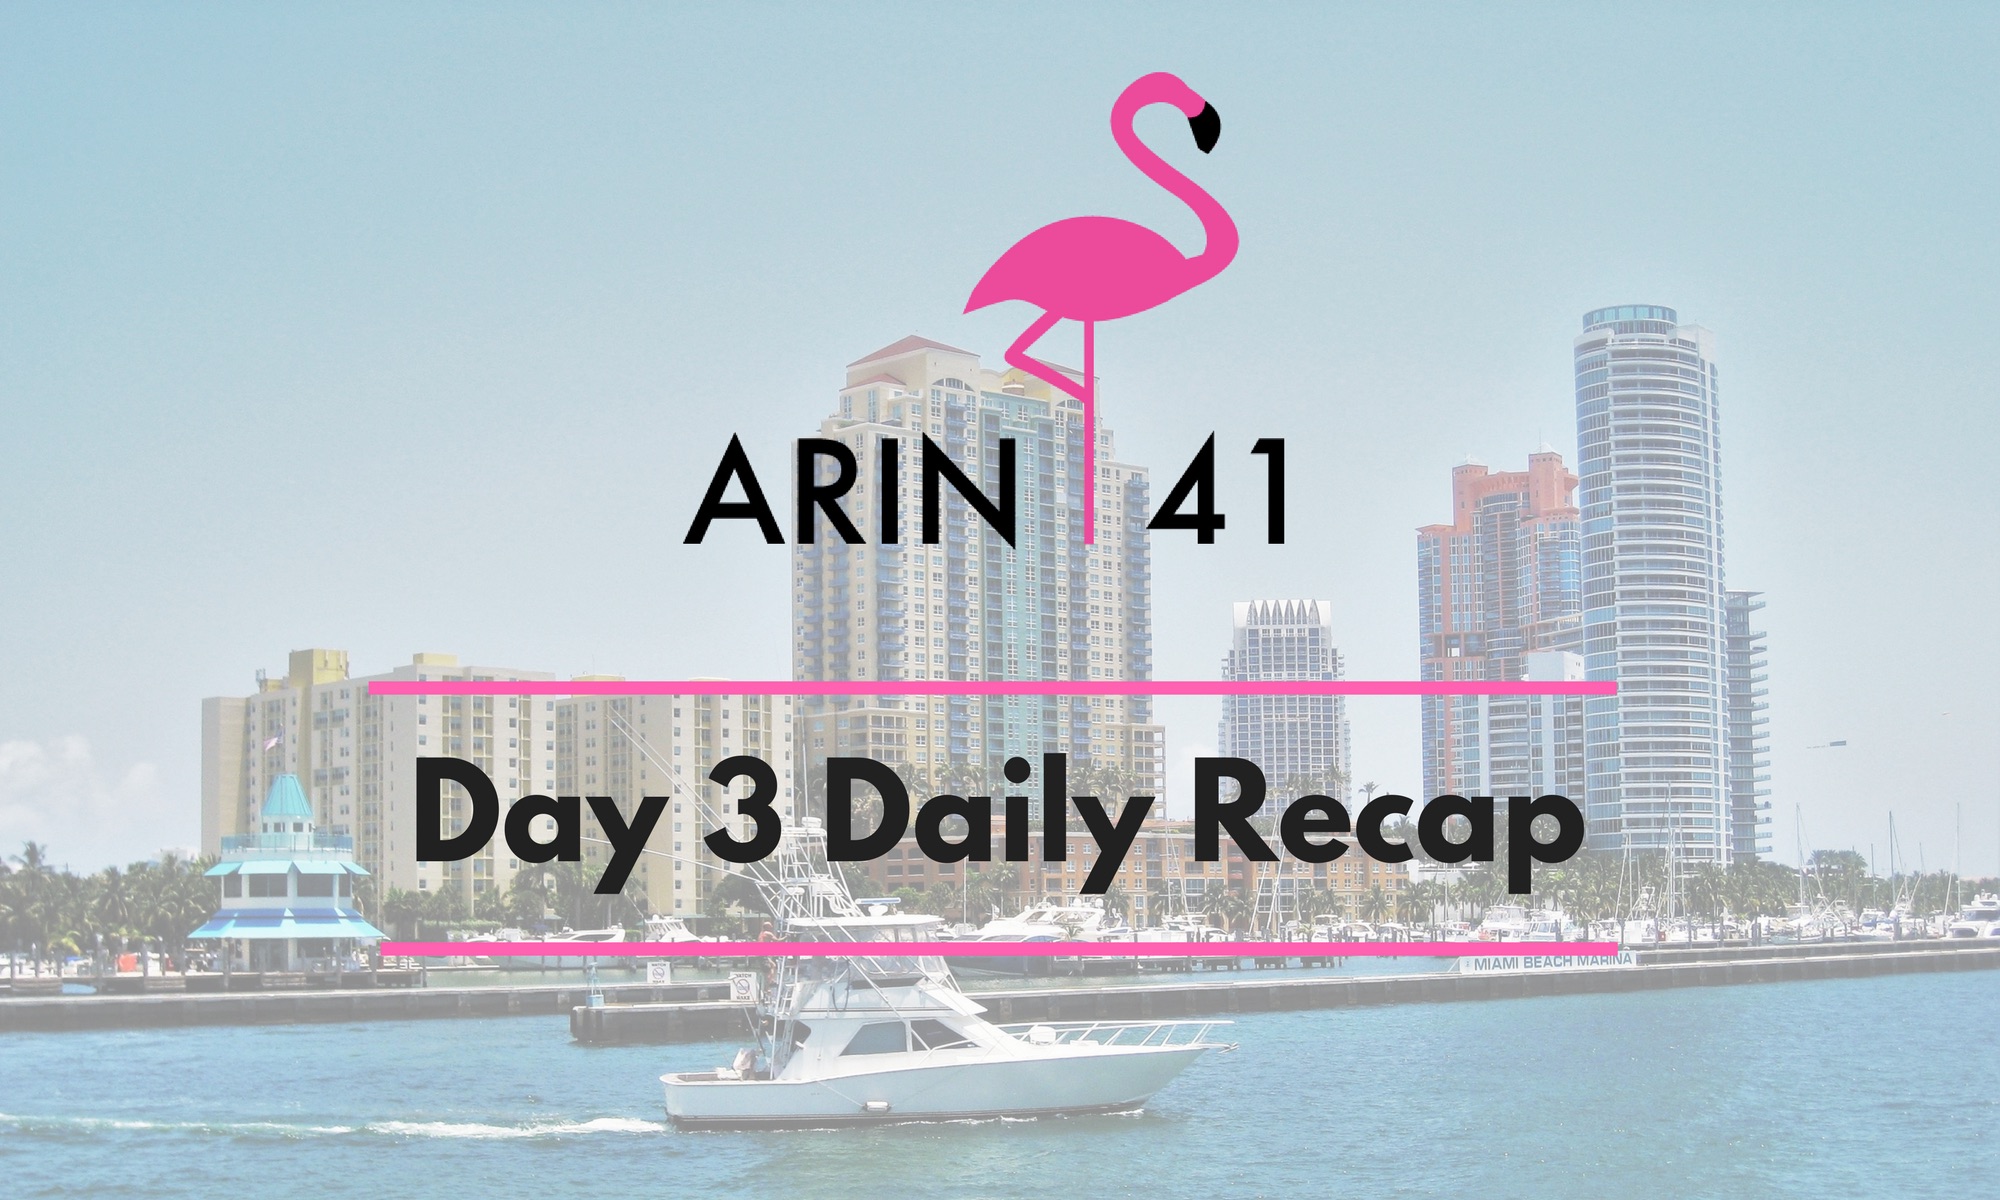 ARIN 41 Day 3 Daily Recap